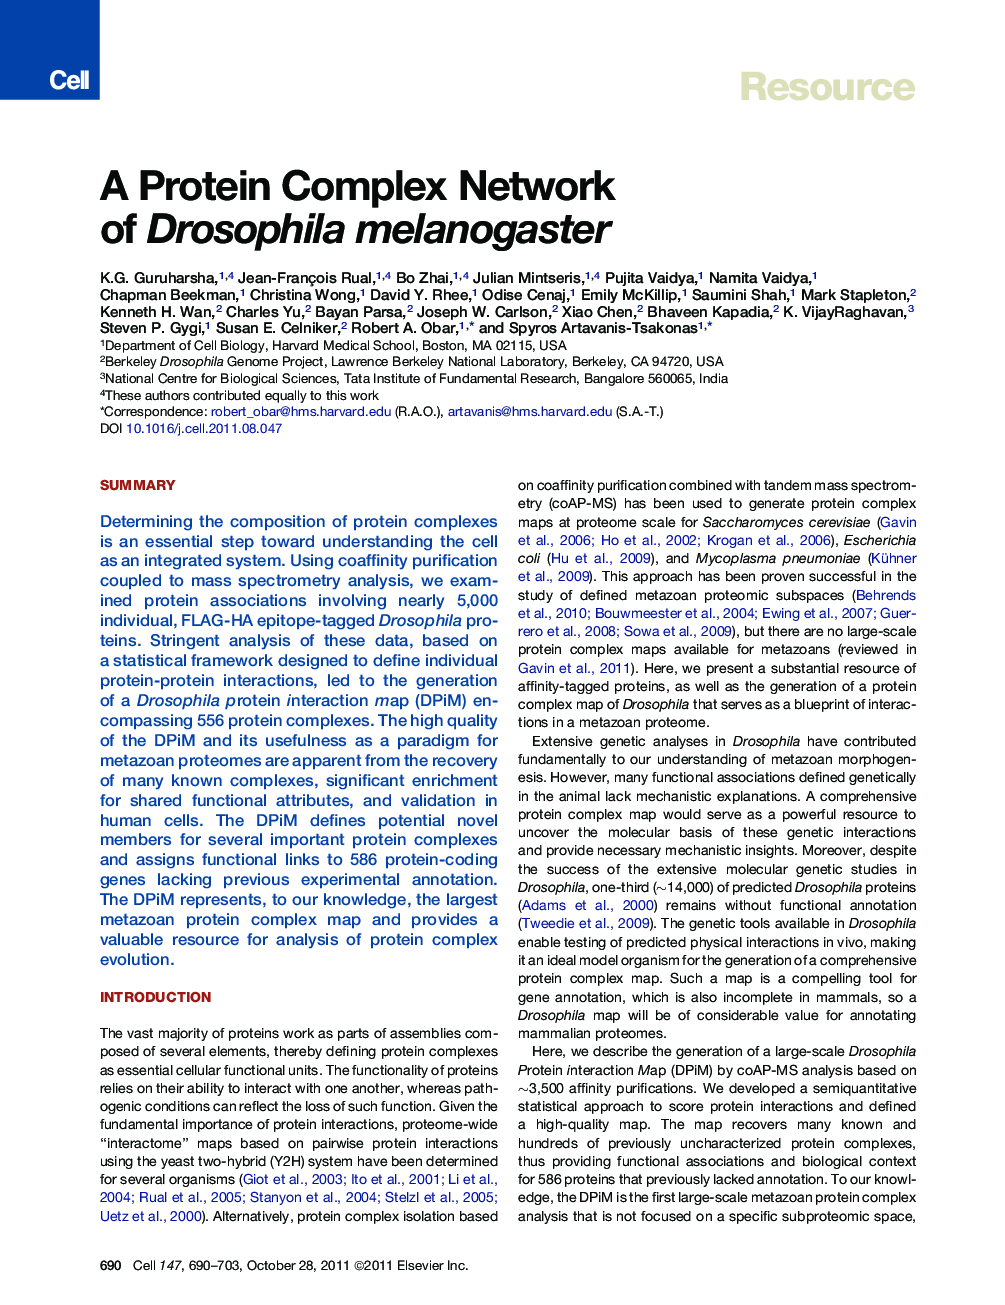 A Protein Complex Network of Drosophila melanogaster